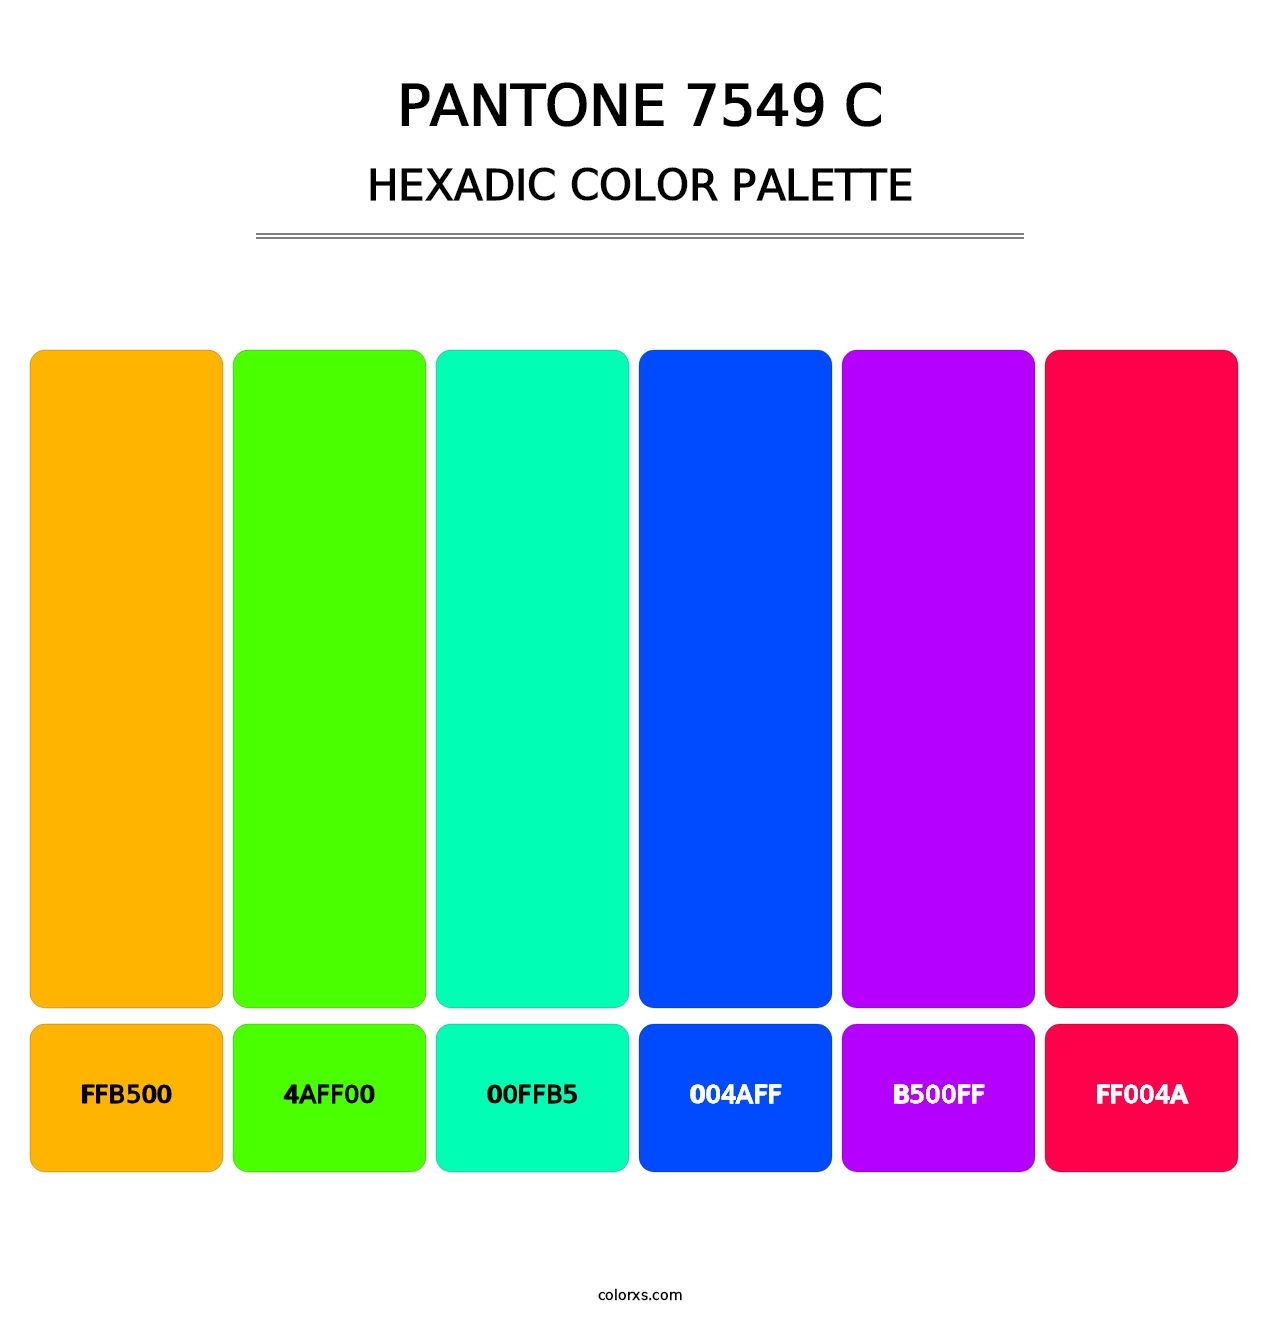 PANTONE 7549 C - Hexadic Color Palette